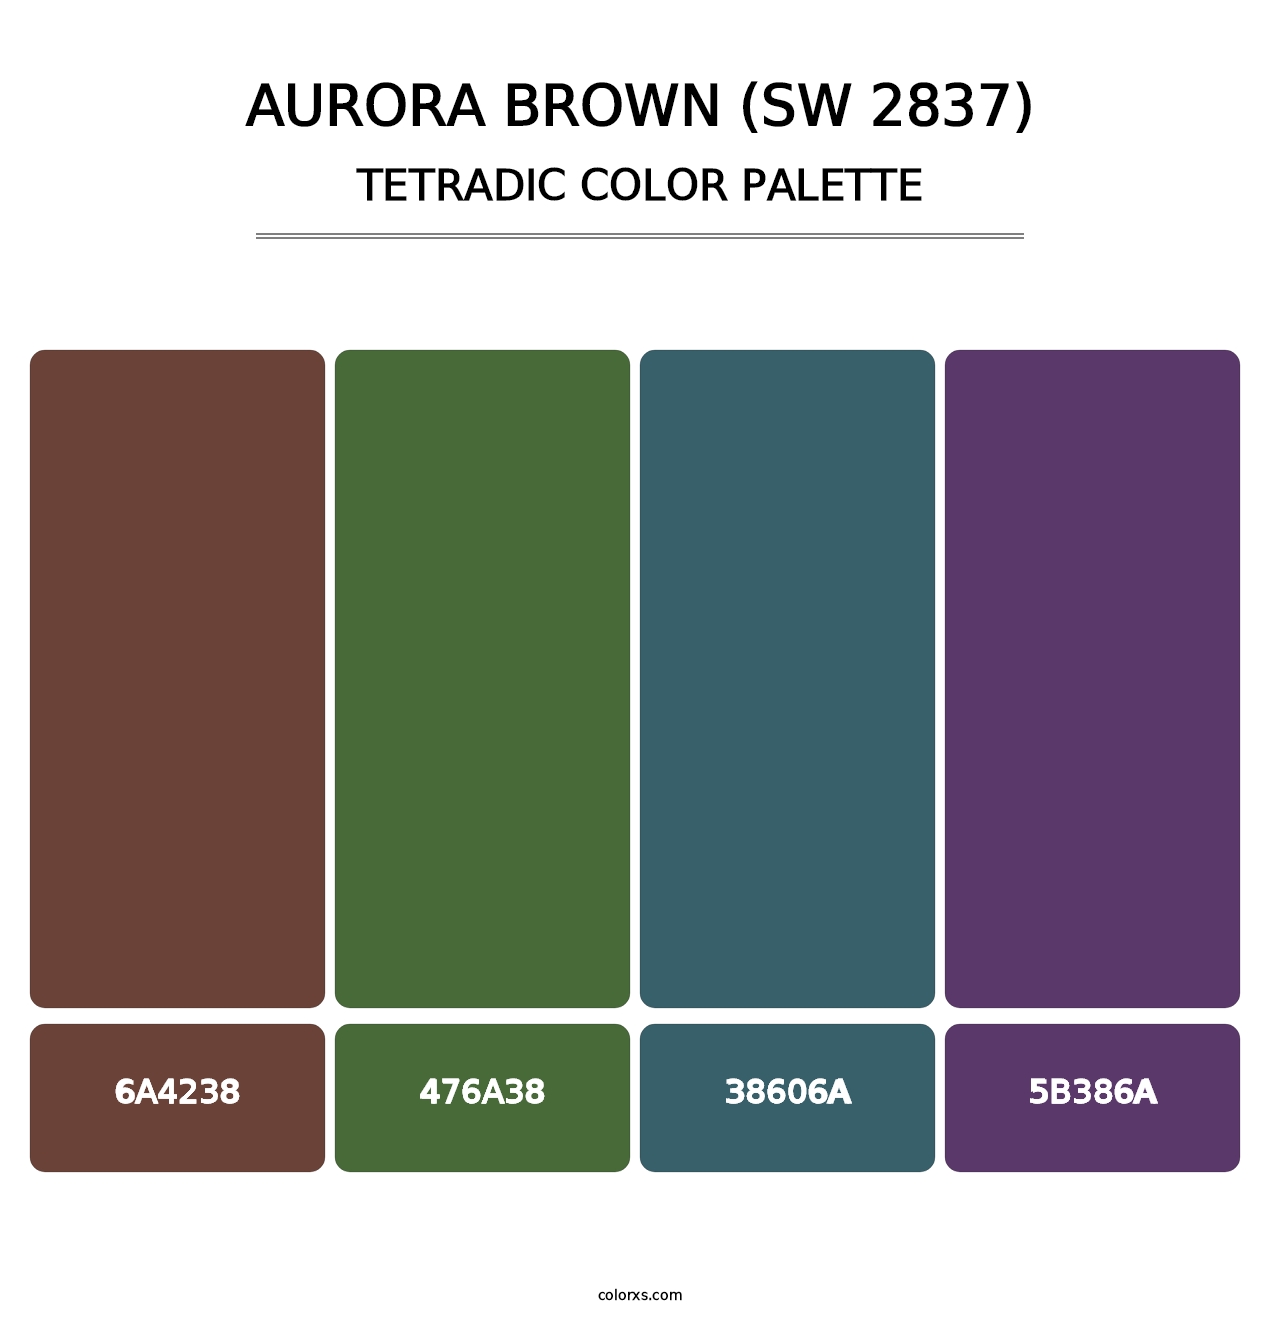 Aurora Brown (SW 2837) - Tetradic Color Palette